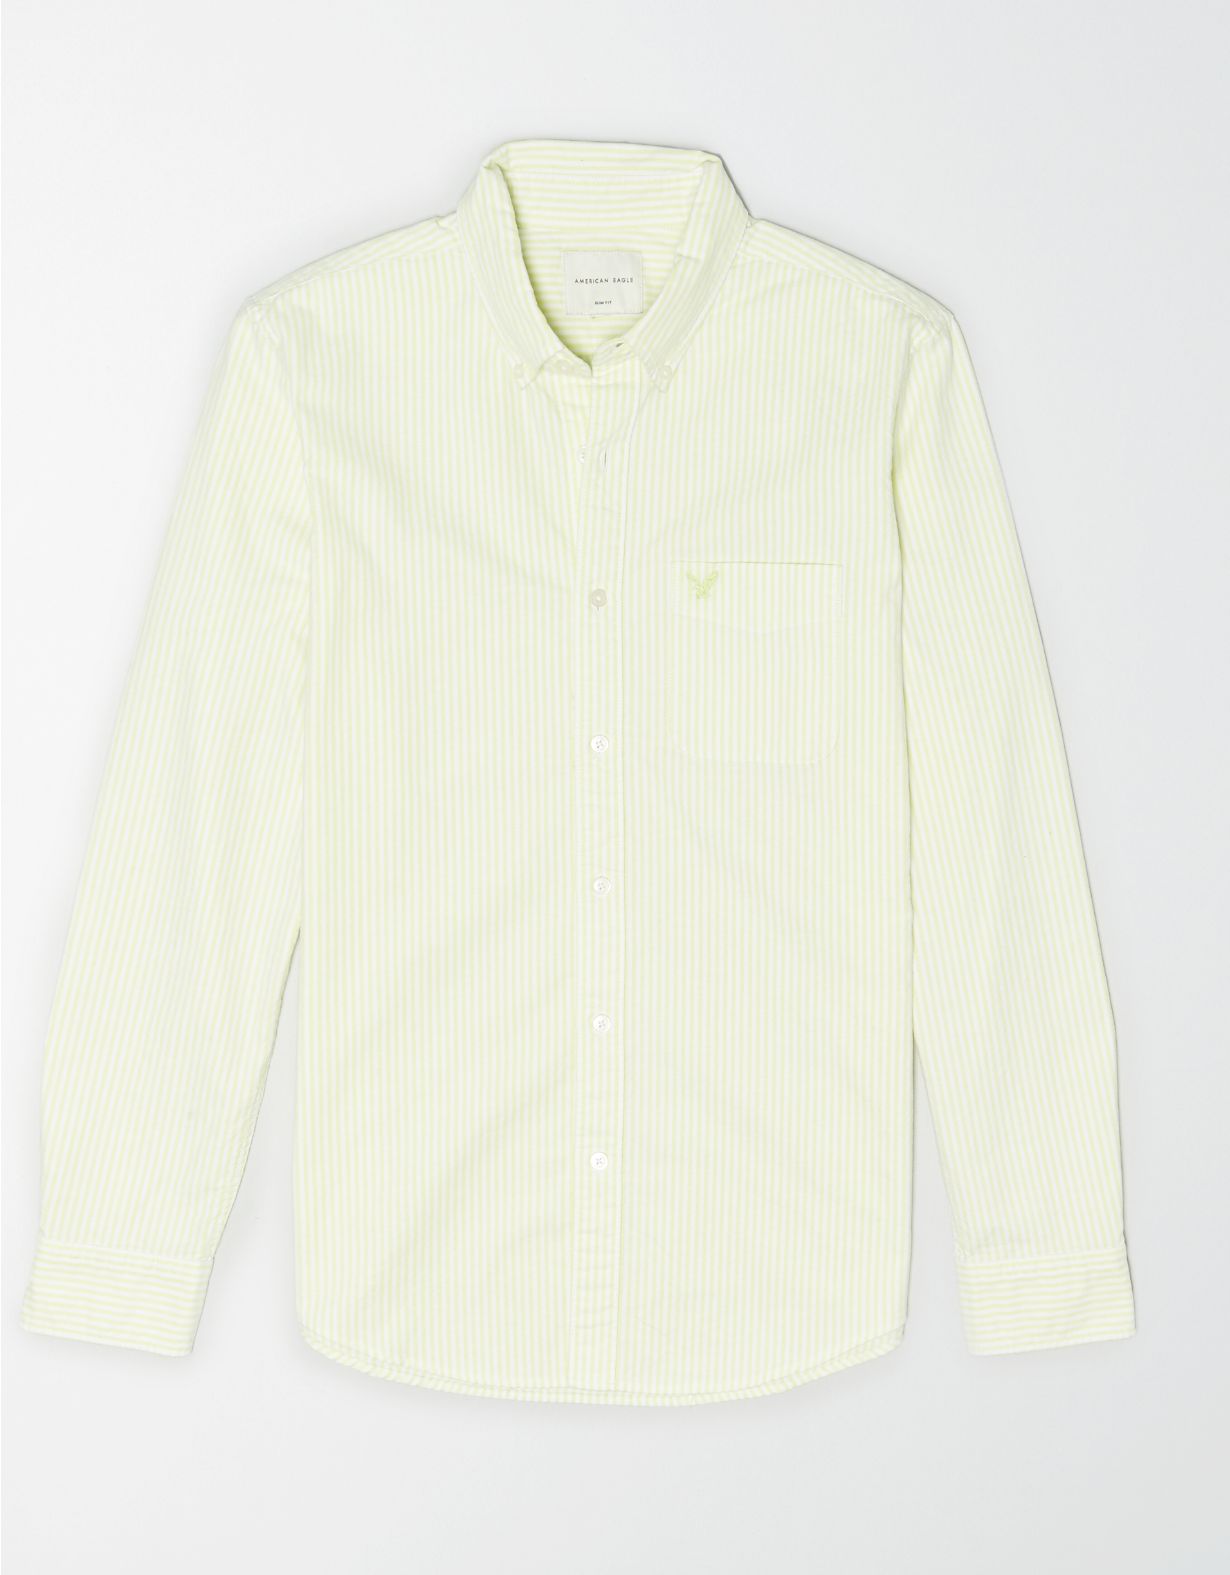 AE Oxford Button Up Shirt